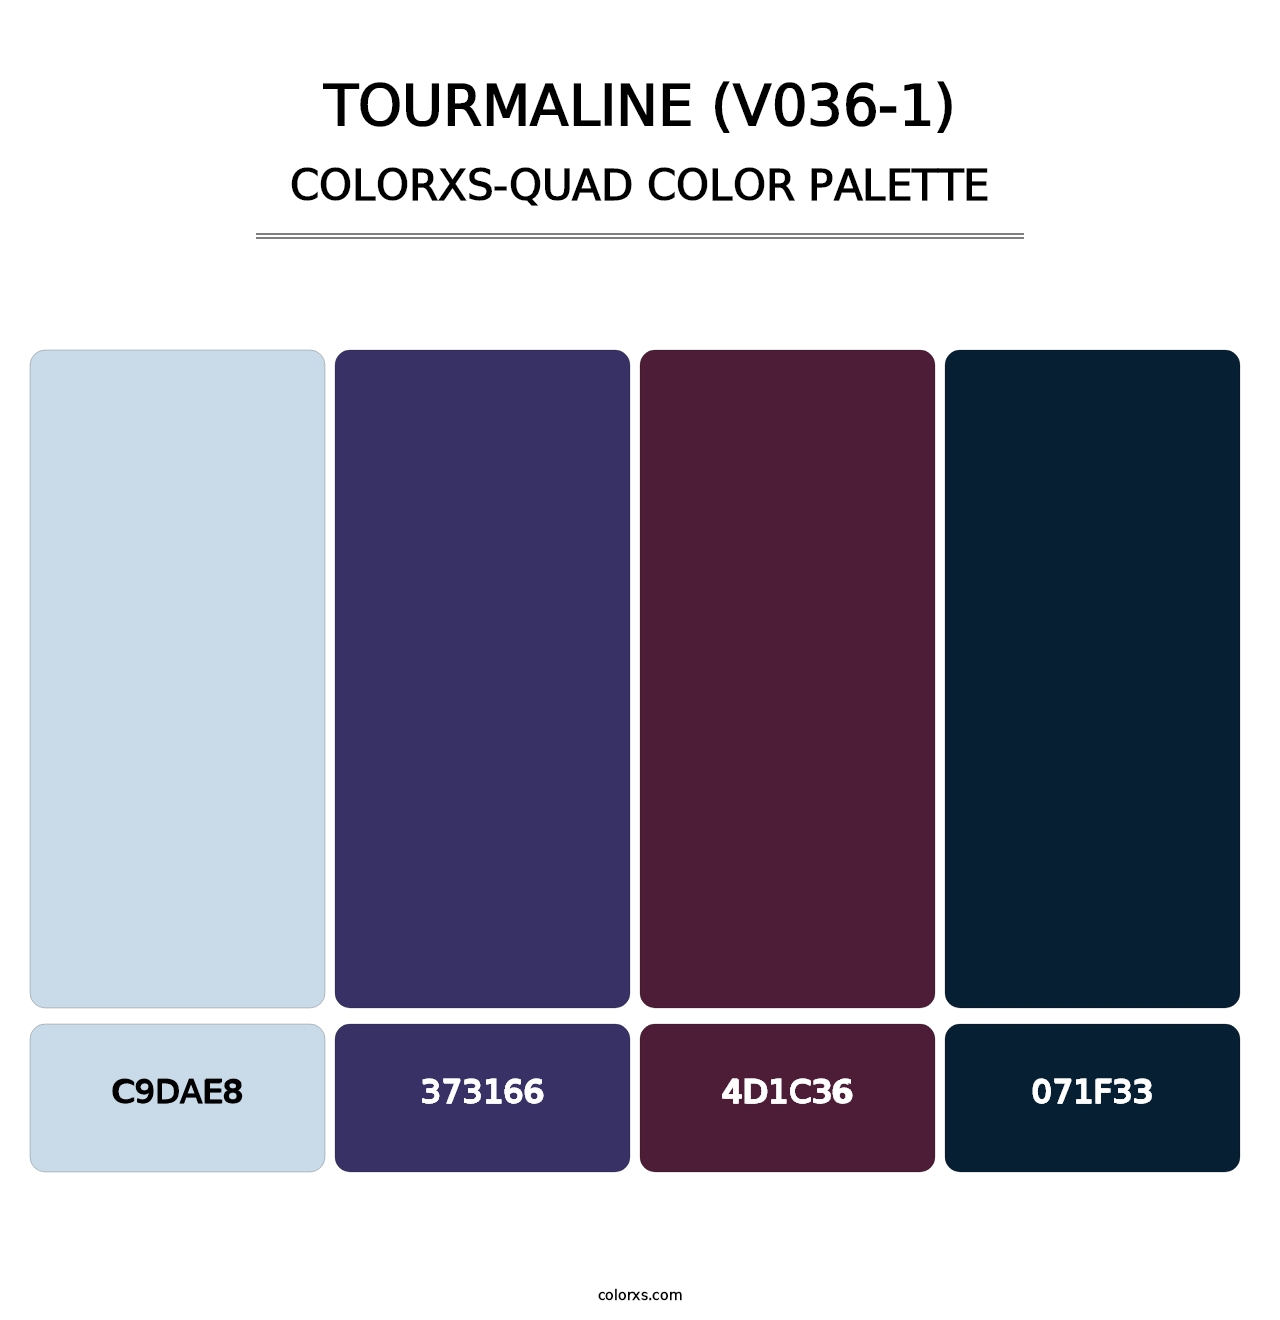 Tourmaline (V036-1) - Colorxs Quad Palette